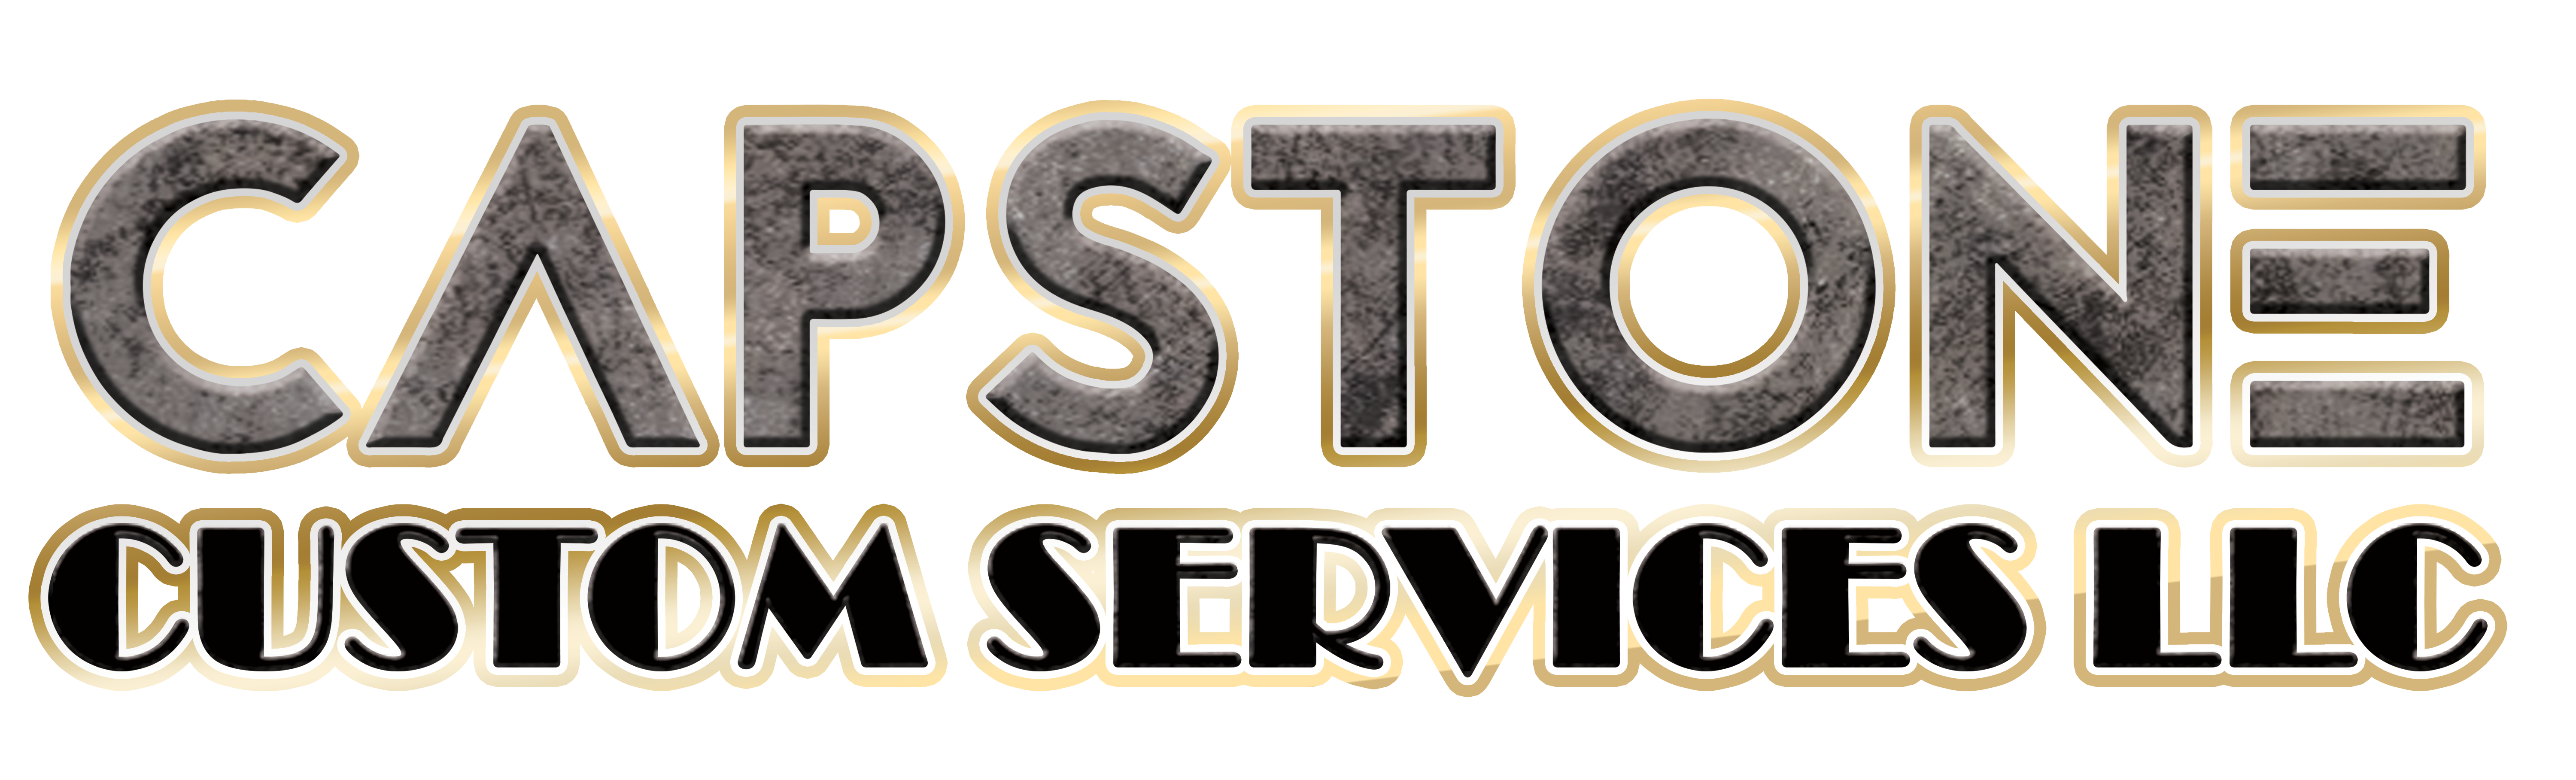 Capstone Custom Services LLC Logo